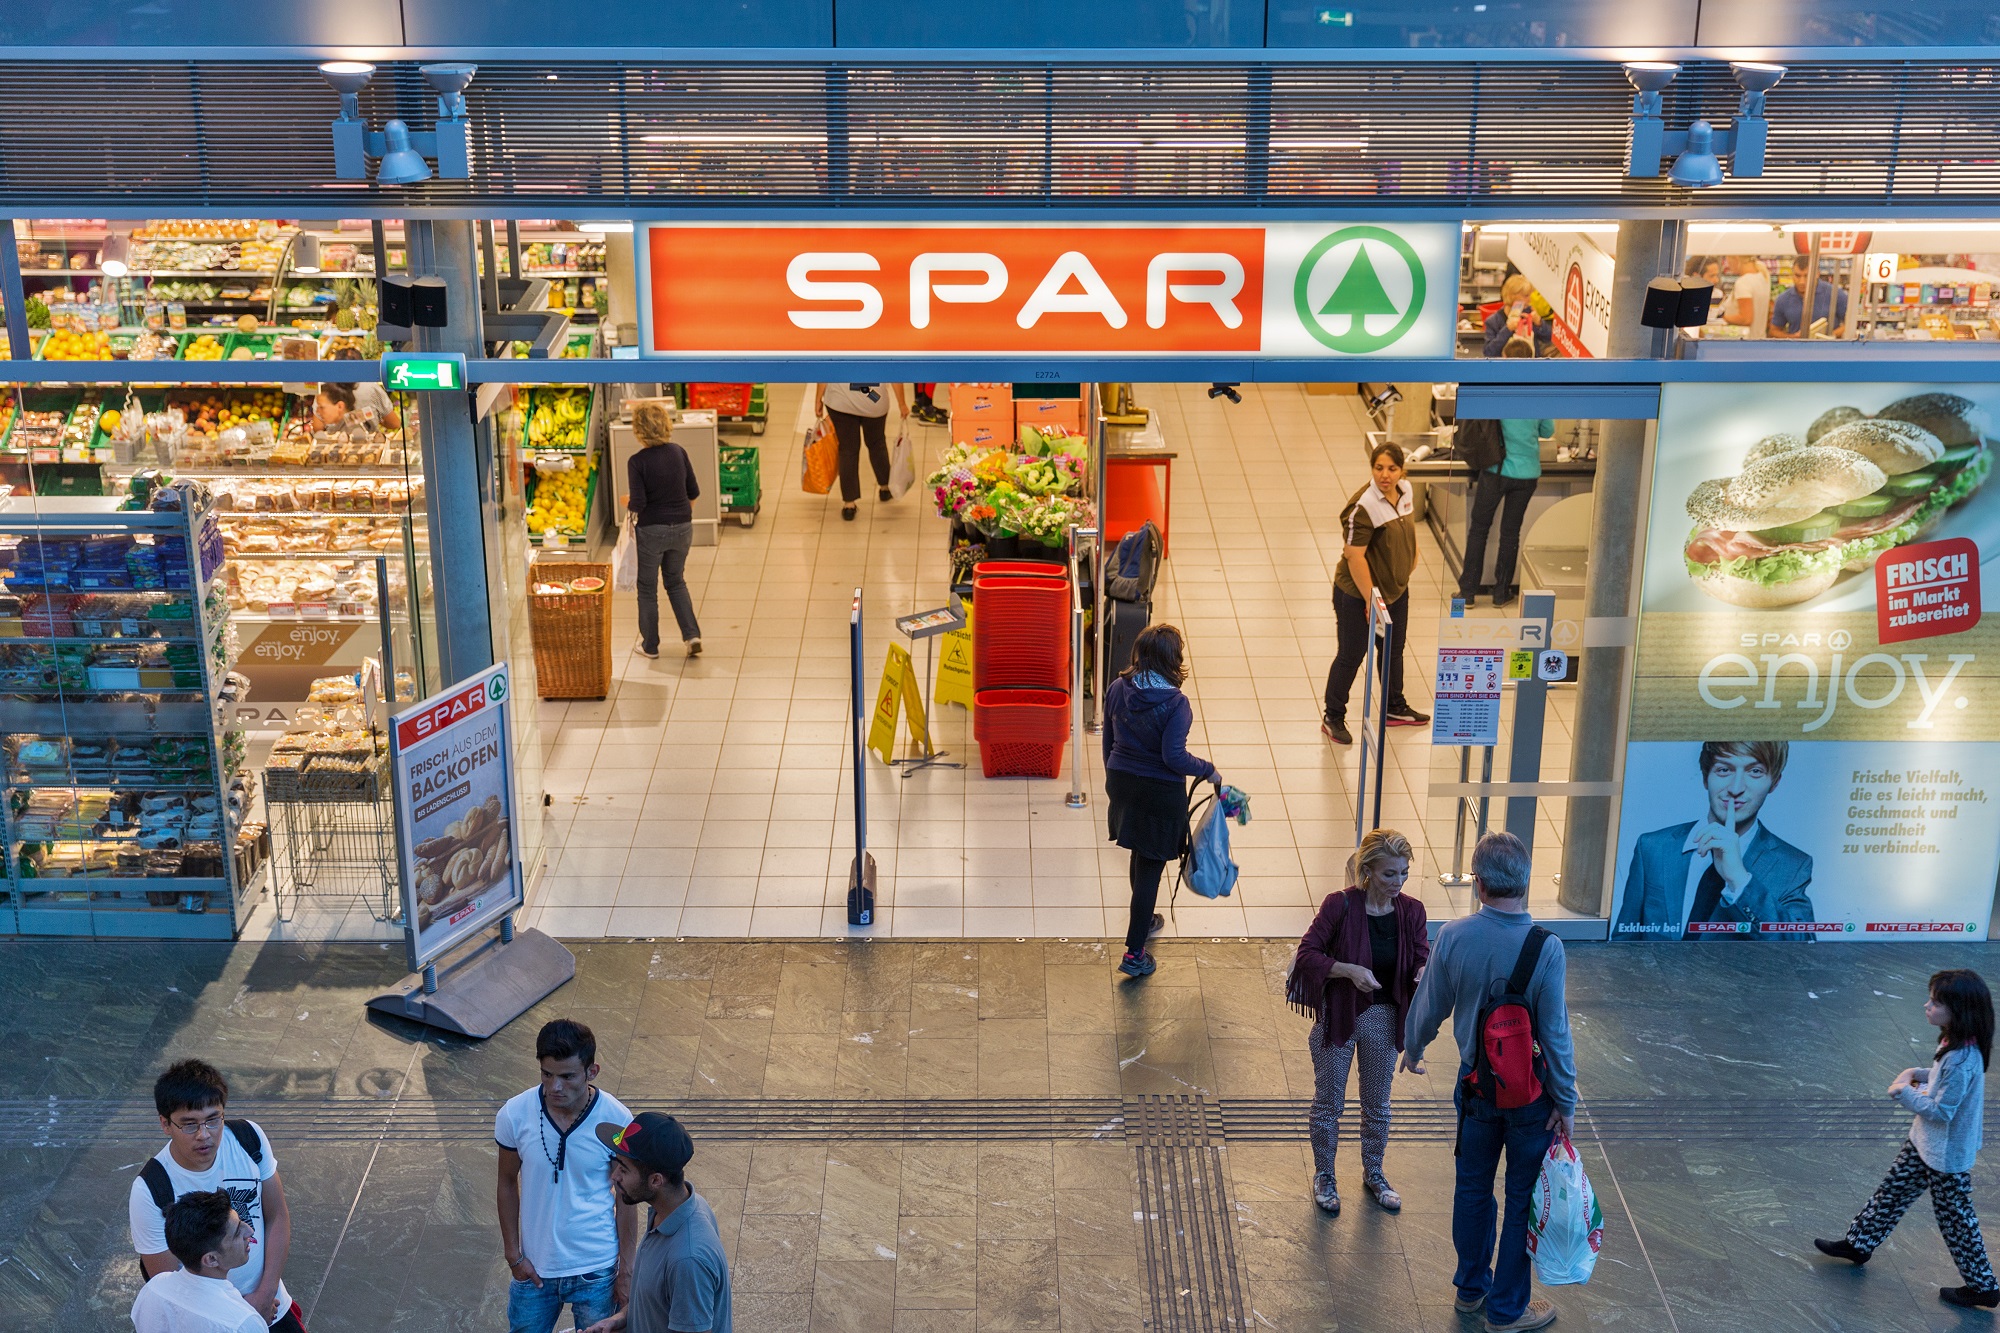 Spar International reports global sales of €37.1bn in 2019